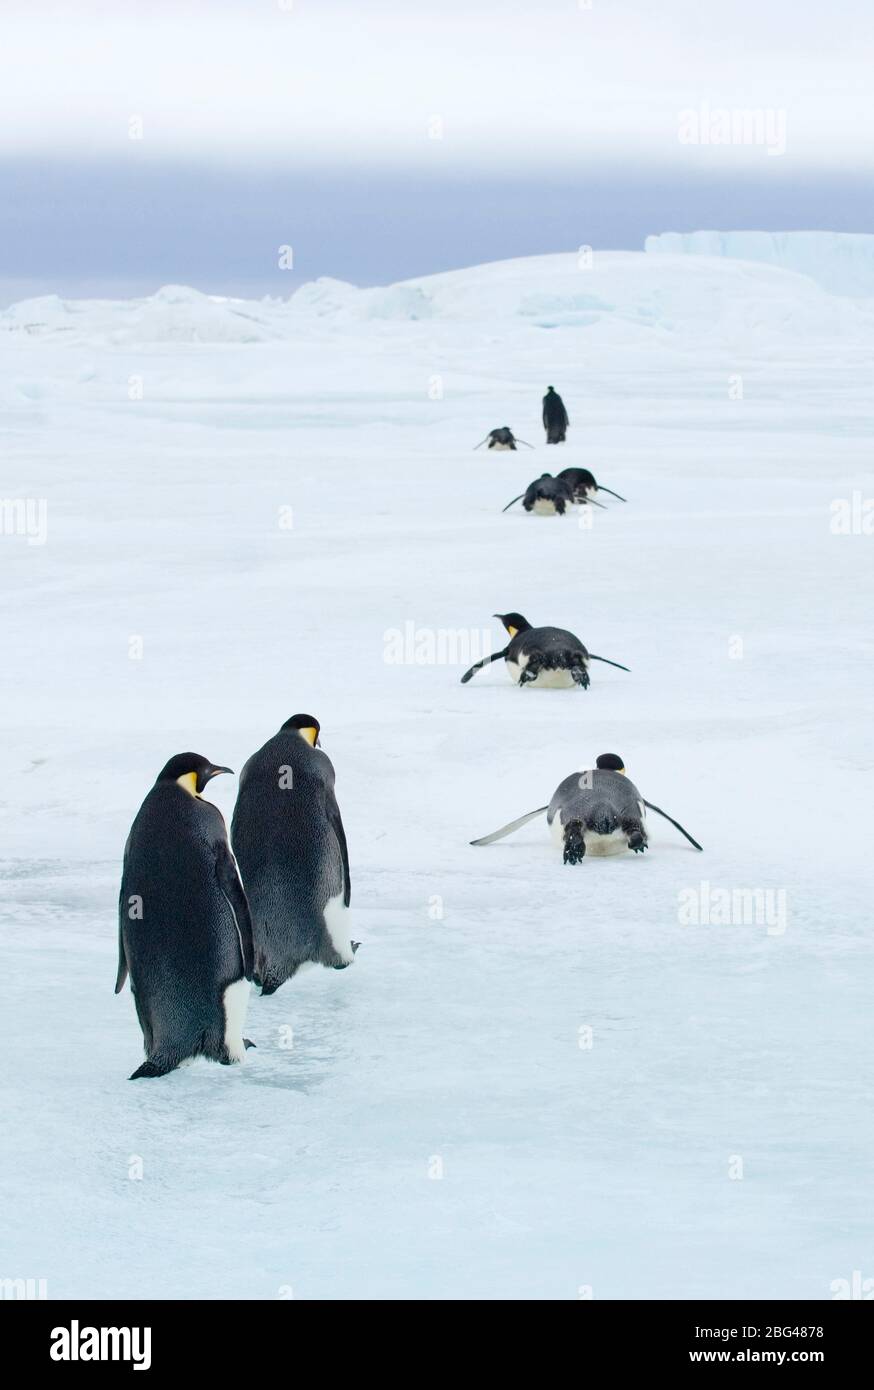 Manchots empereurs Aptenodytes fosteri voyageant à travers de la glace de mer près de la mer de Weddell Snow Hill Island Antarctique Novembre Banque D'Images